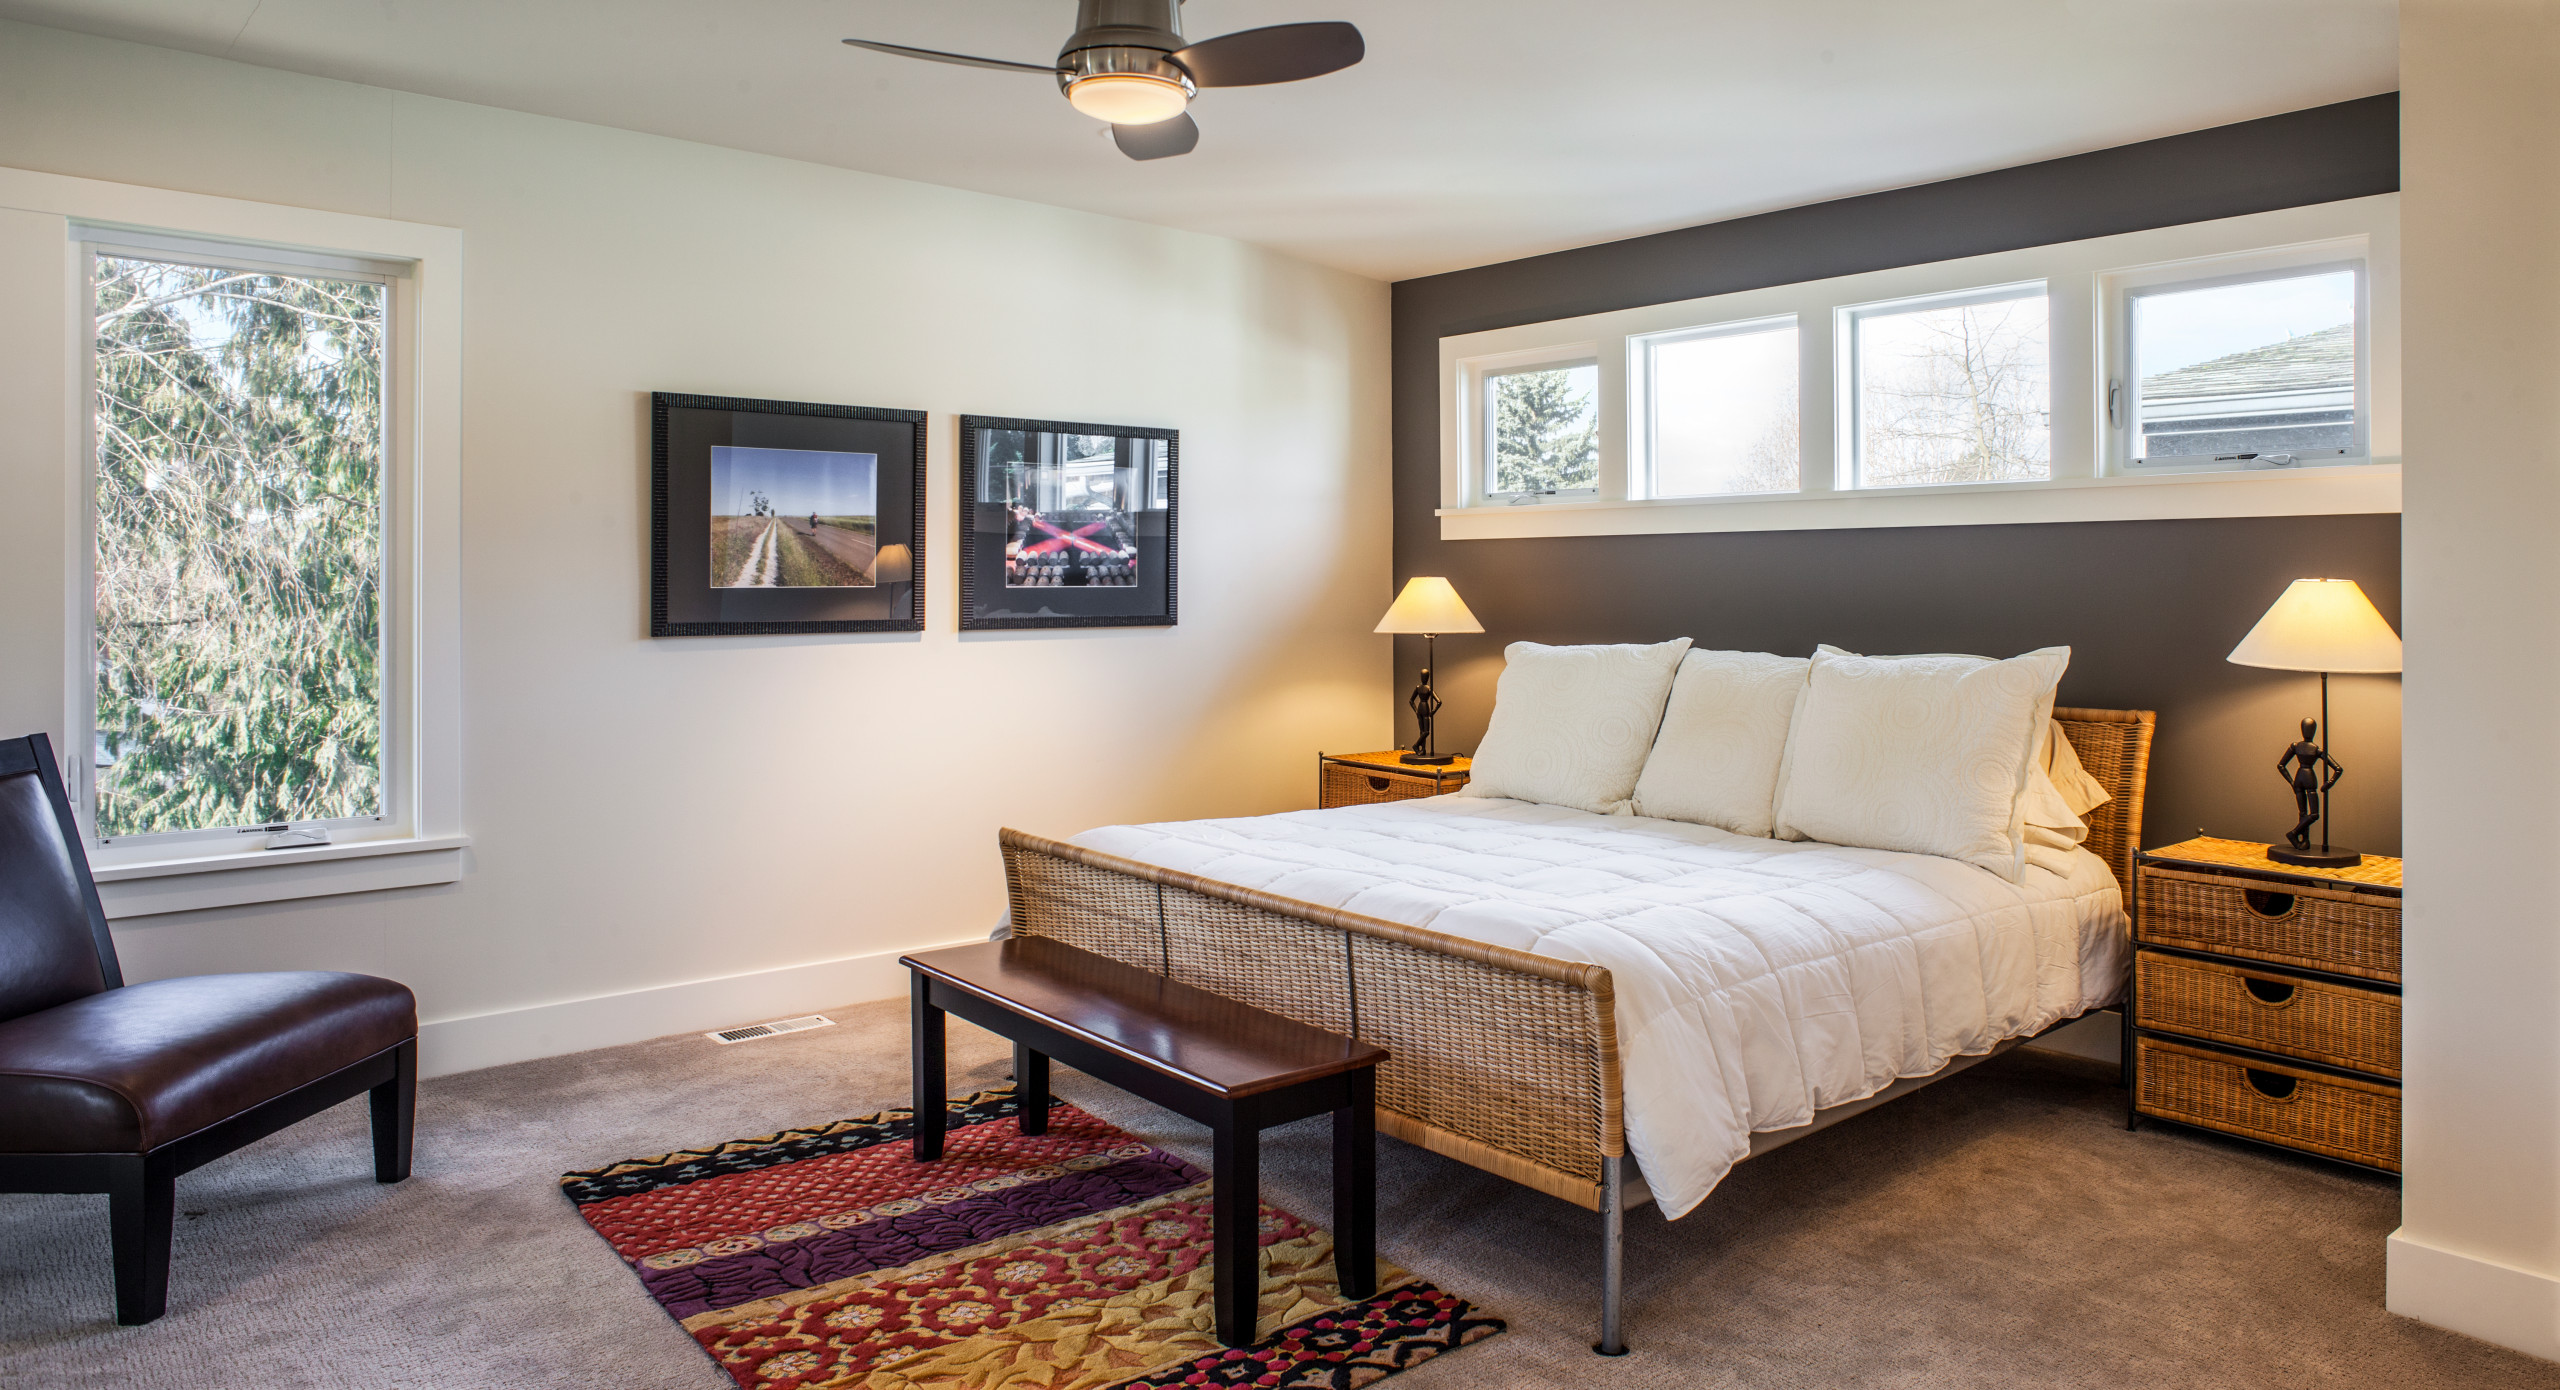 Craftsman / Modern Bedroom Update